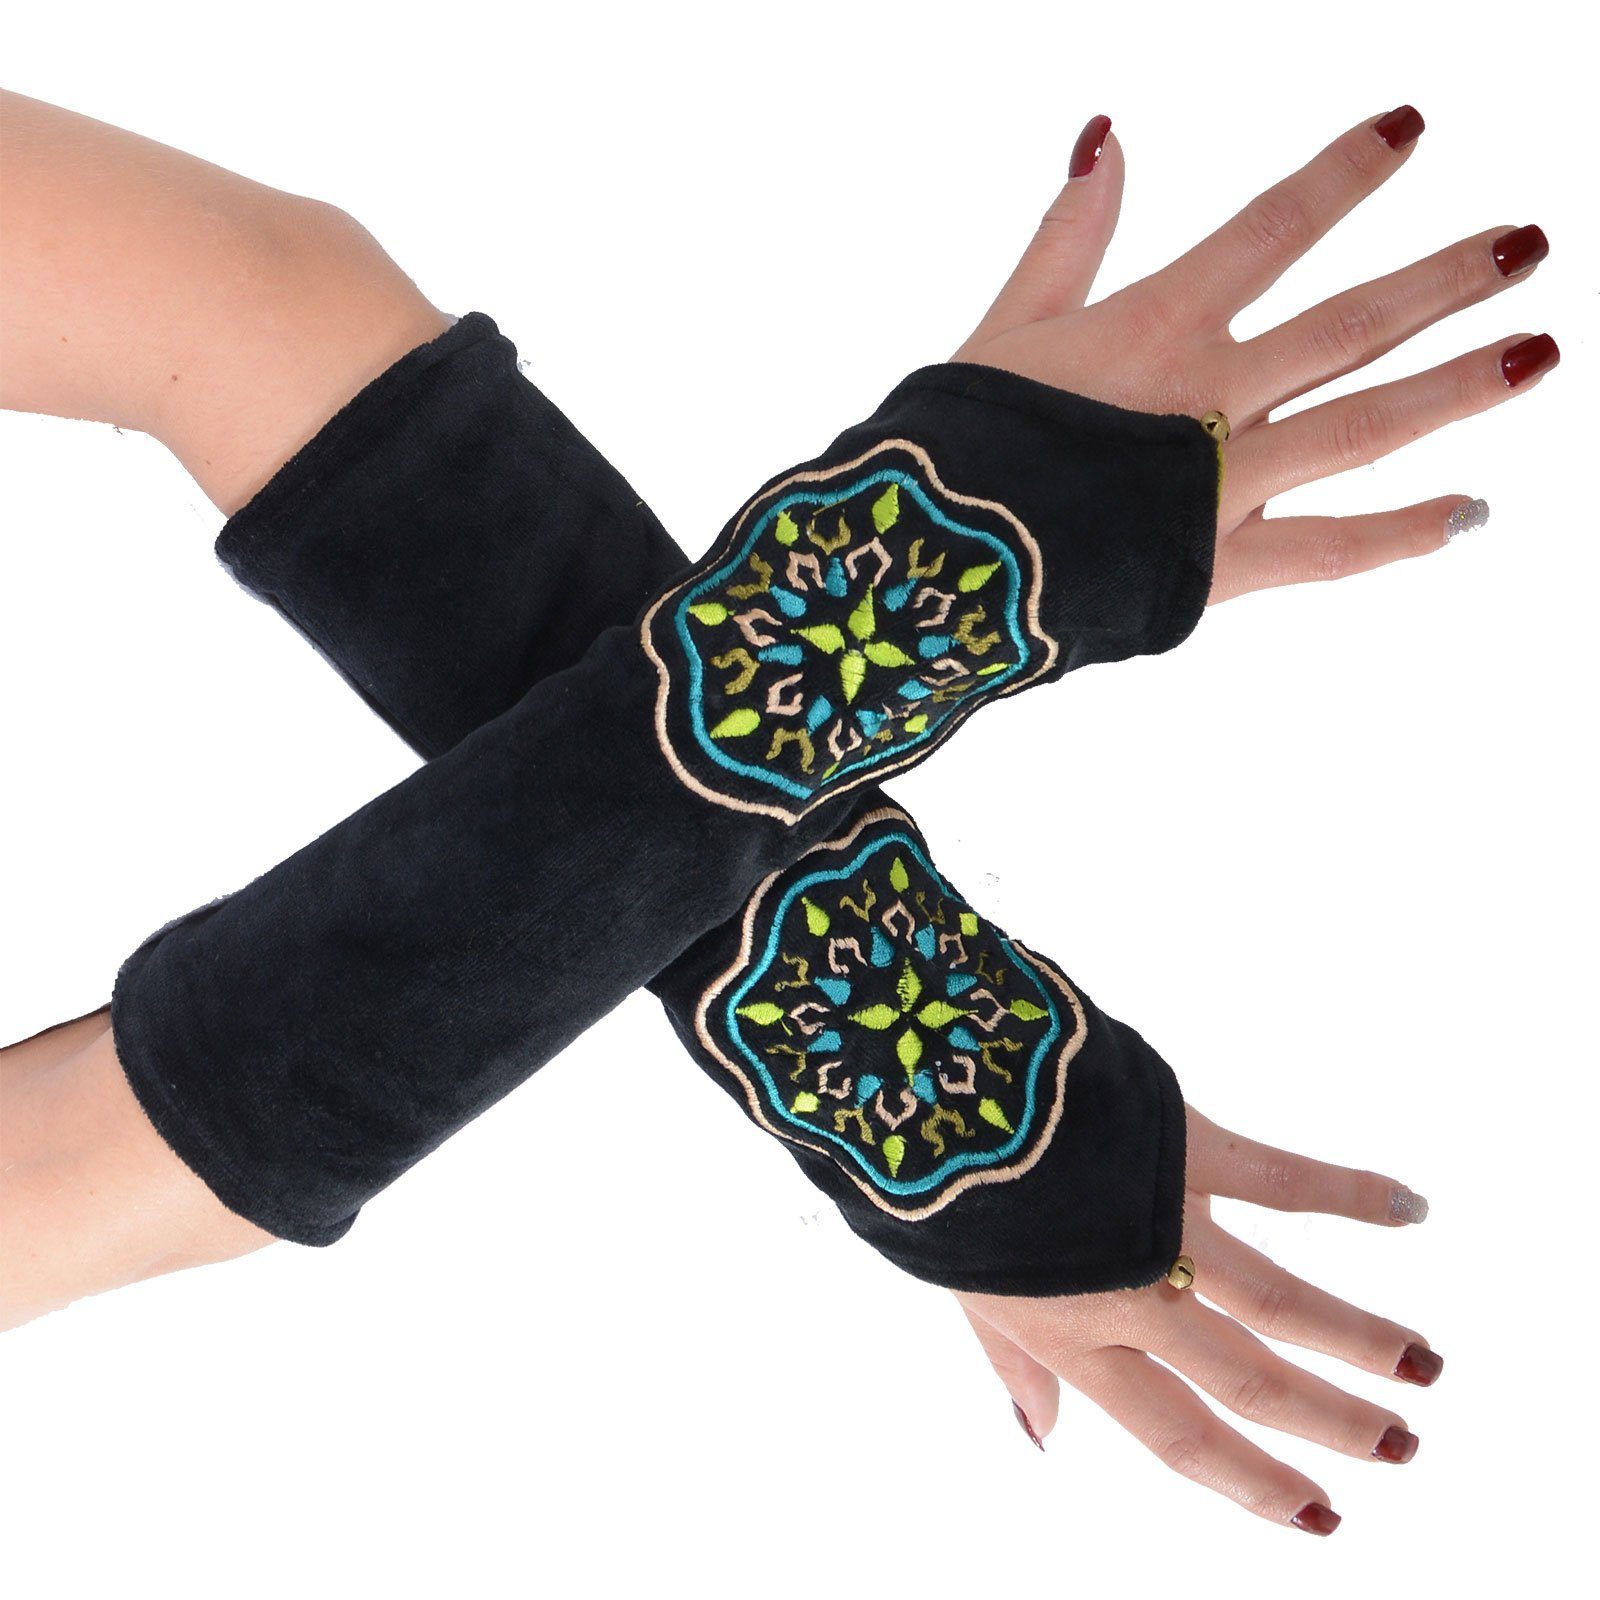 Armstulpen Muster" Armstulpen Boho MAGIE Handwärmer UND Samt Handschuhe Black Schwarz Stulpen / KUNST "Mandala